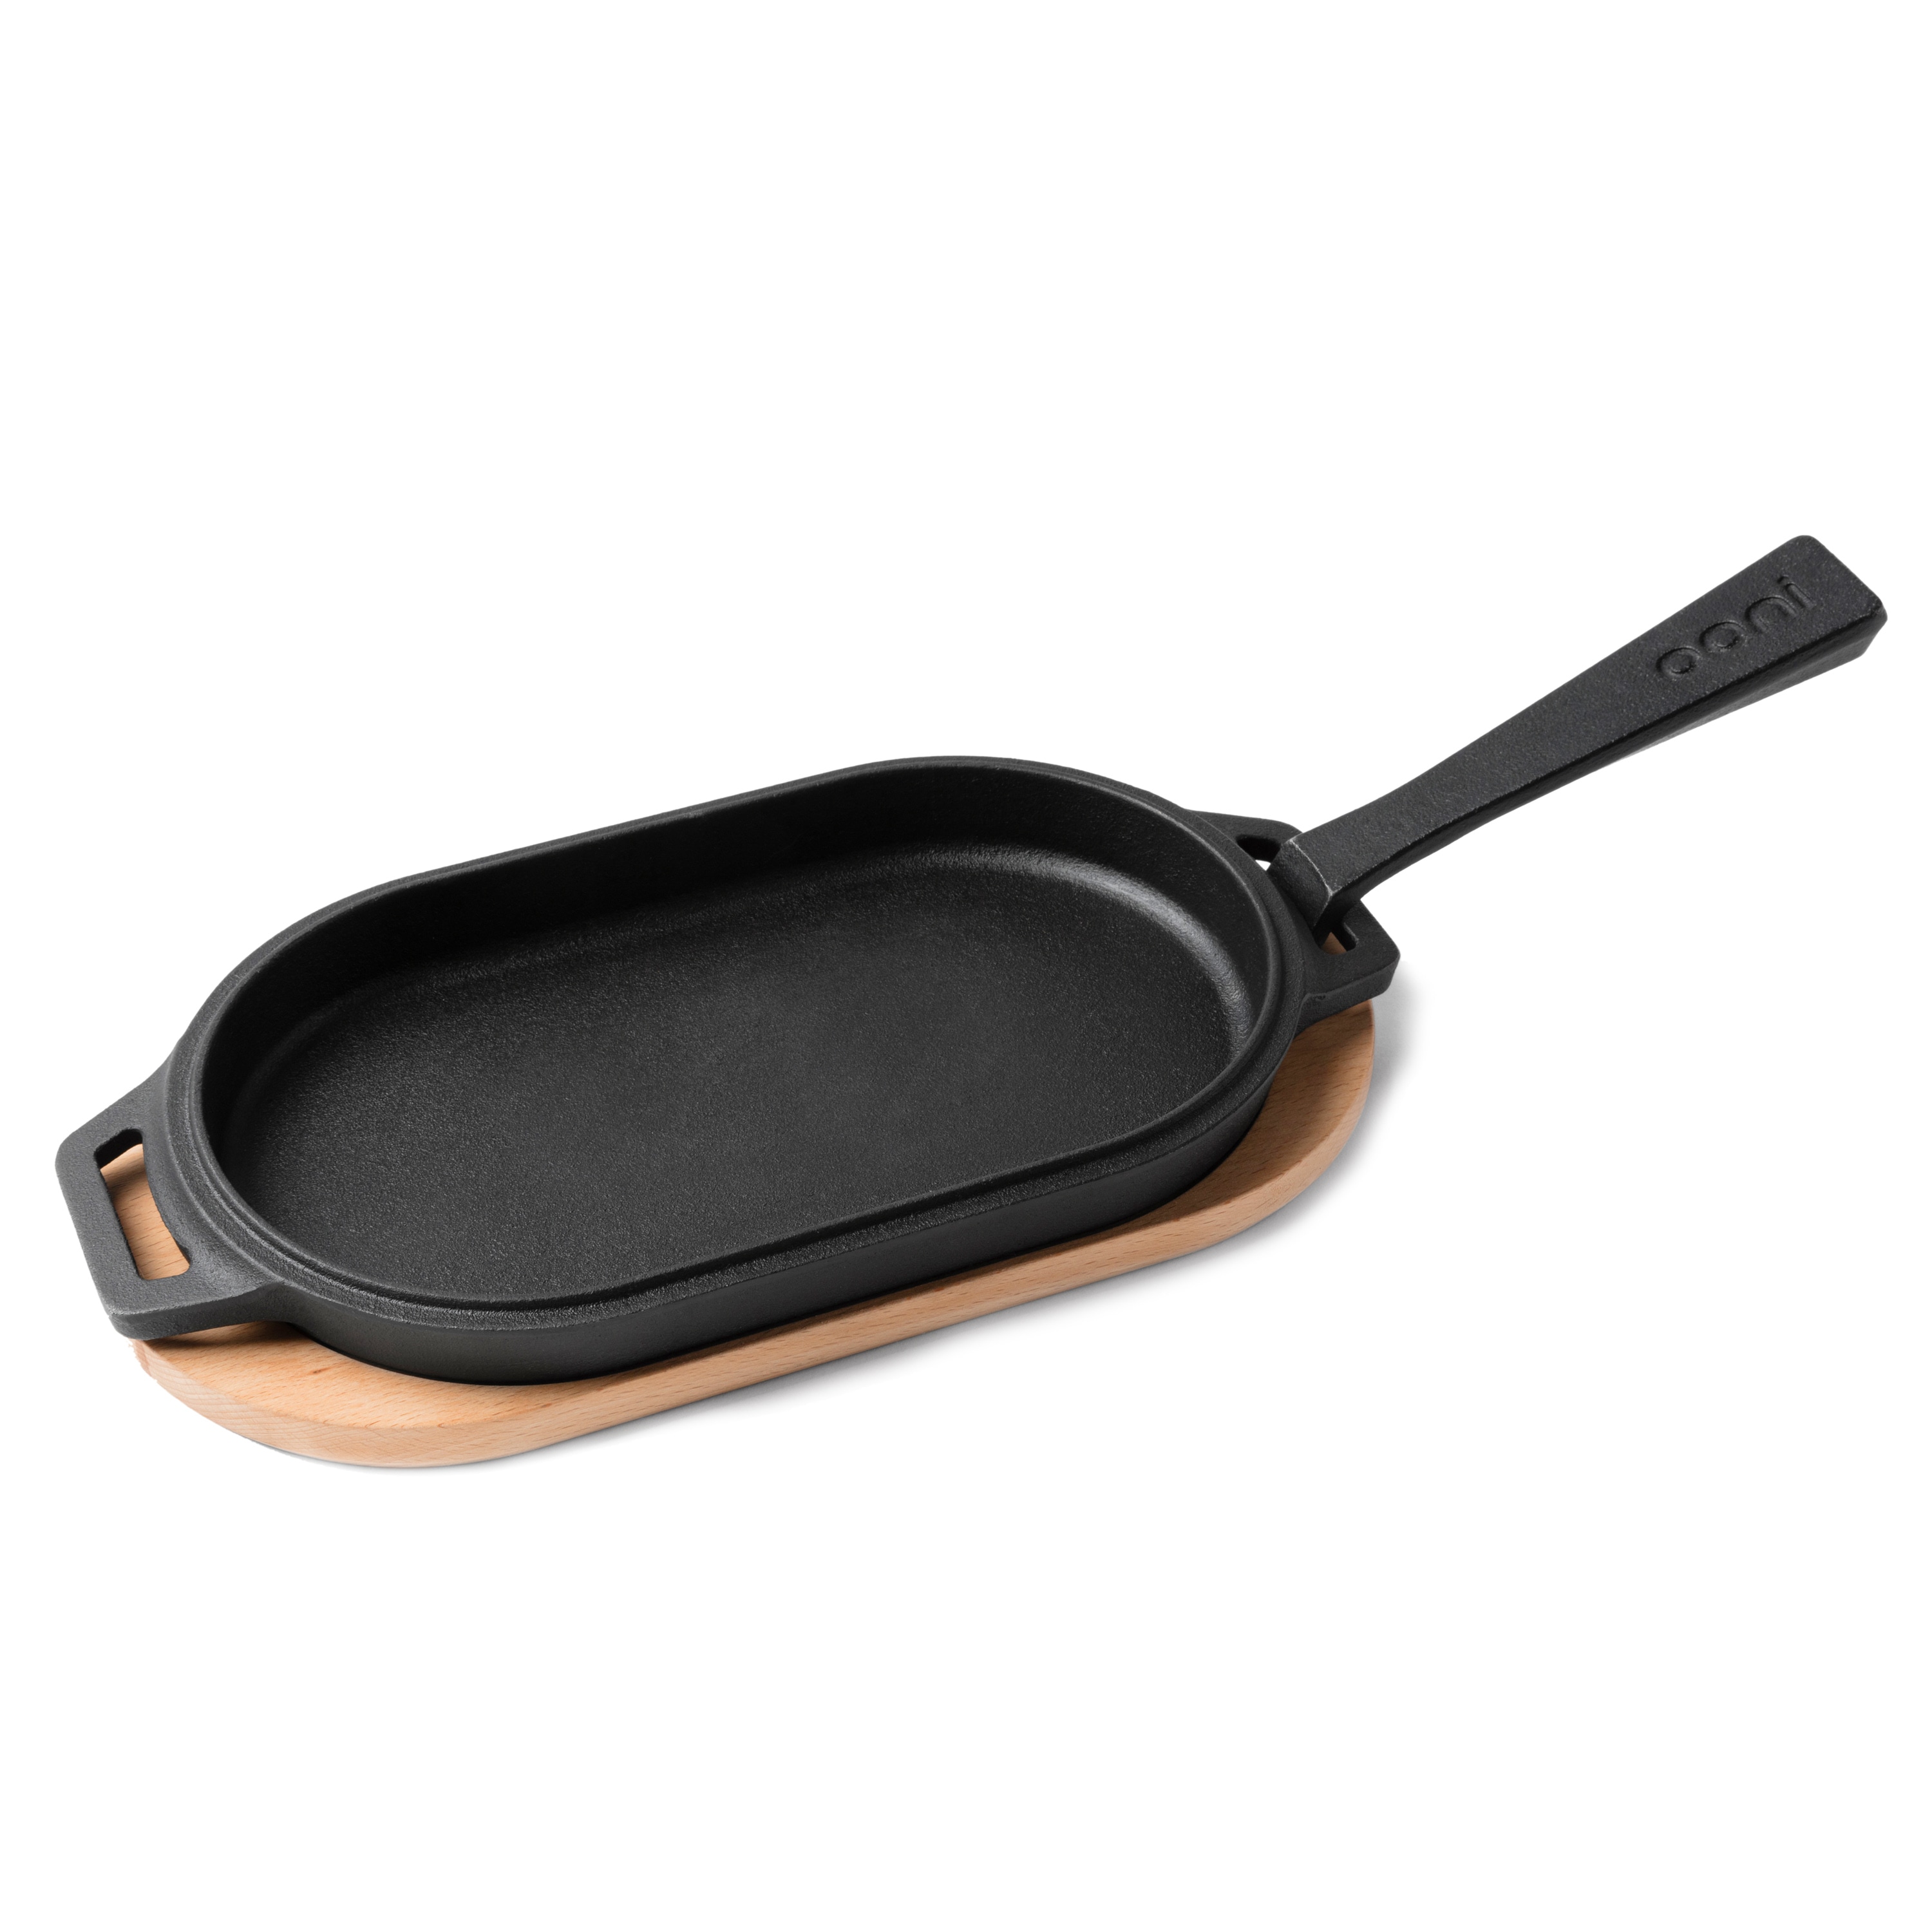 Iron Pan Series boasts Thick Grilling Iron Board II